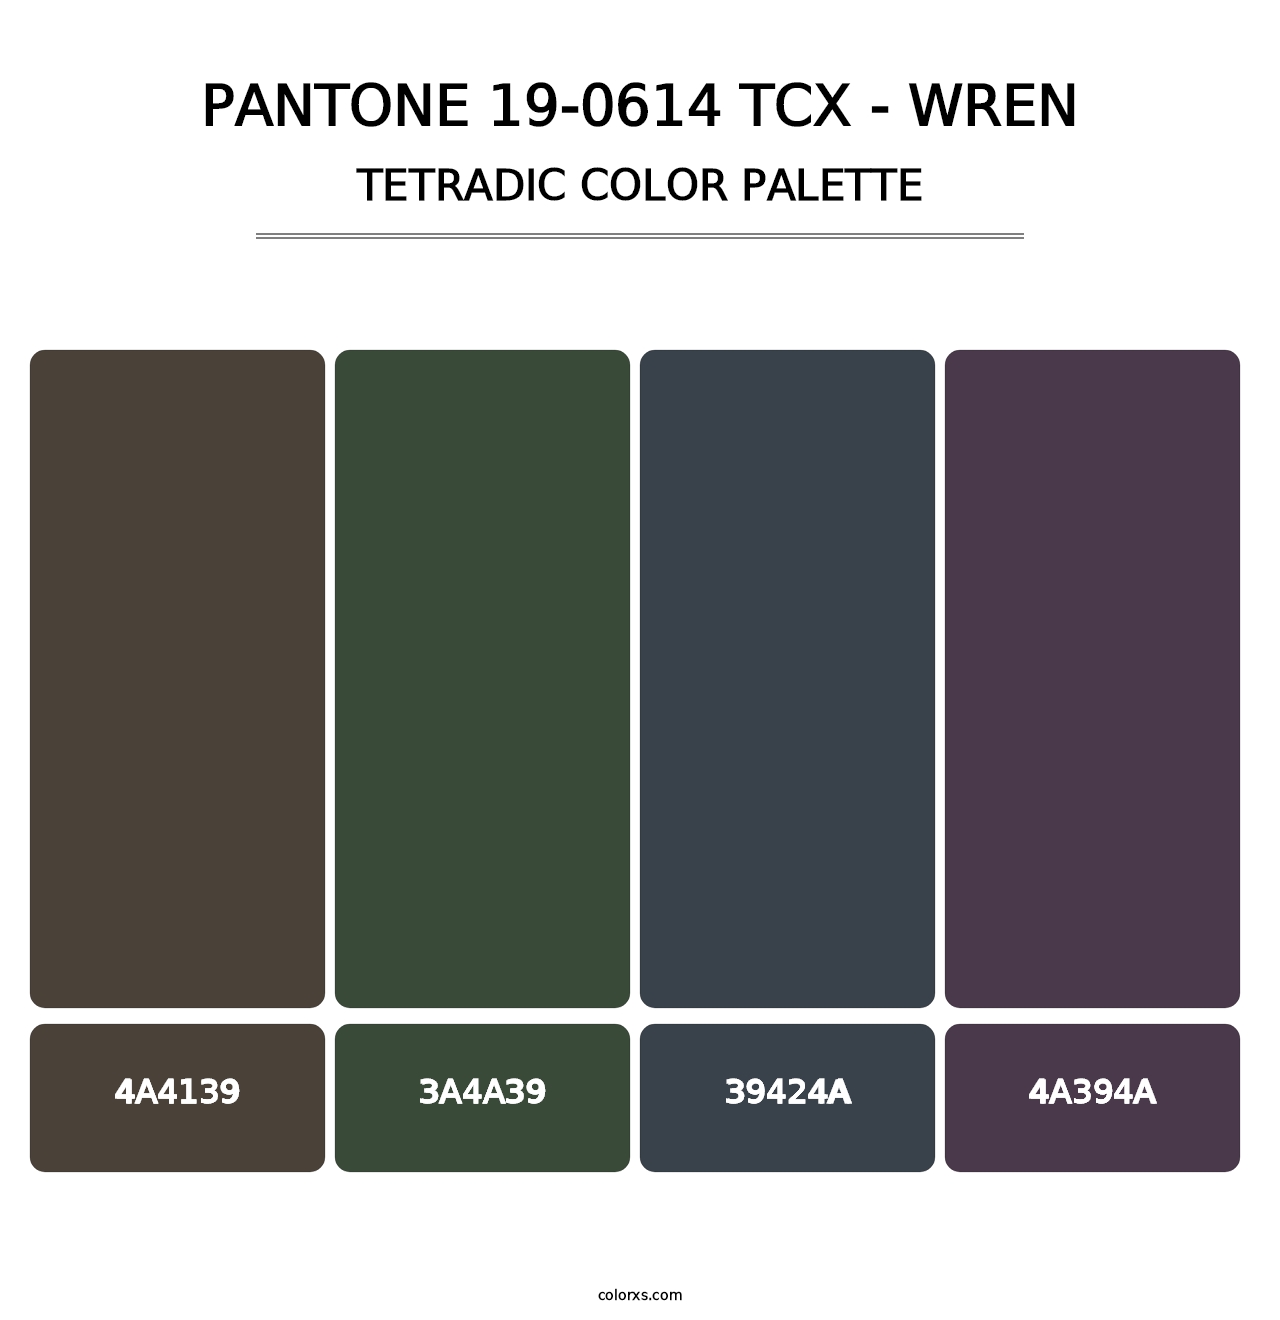 PANTONE 19-0614 TCX - Wren - Tetradic Color Palette